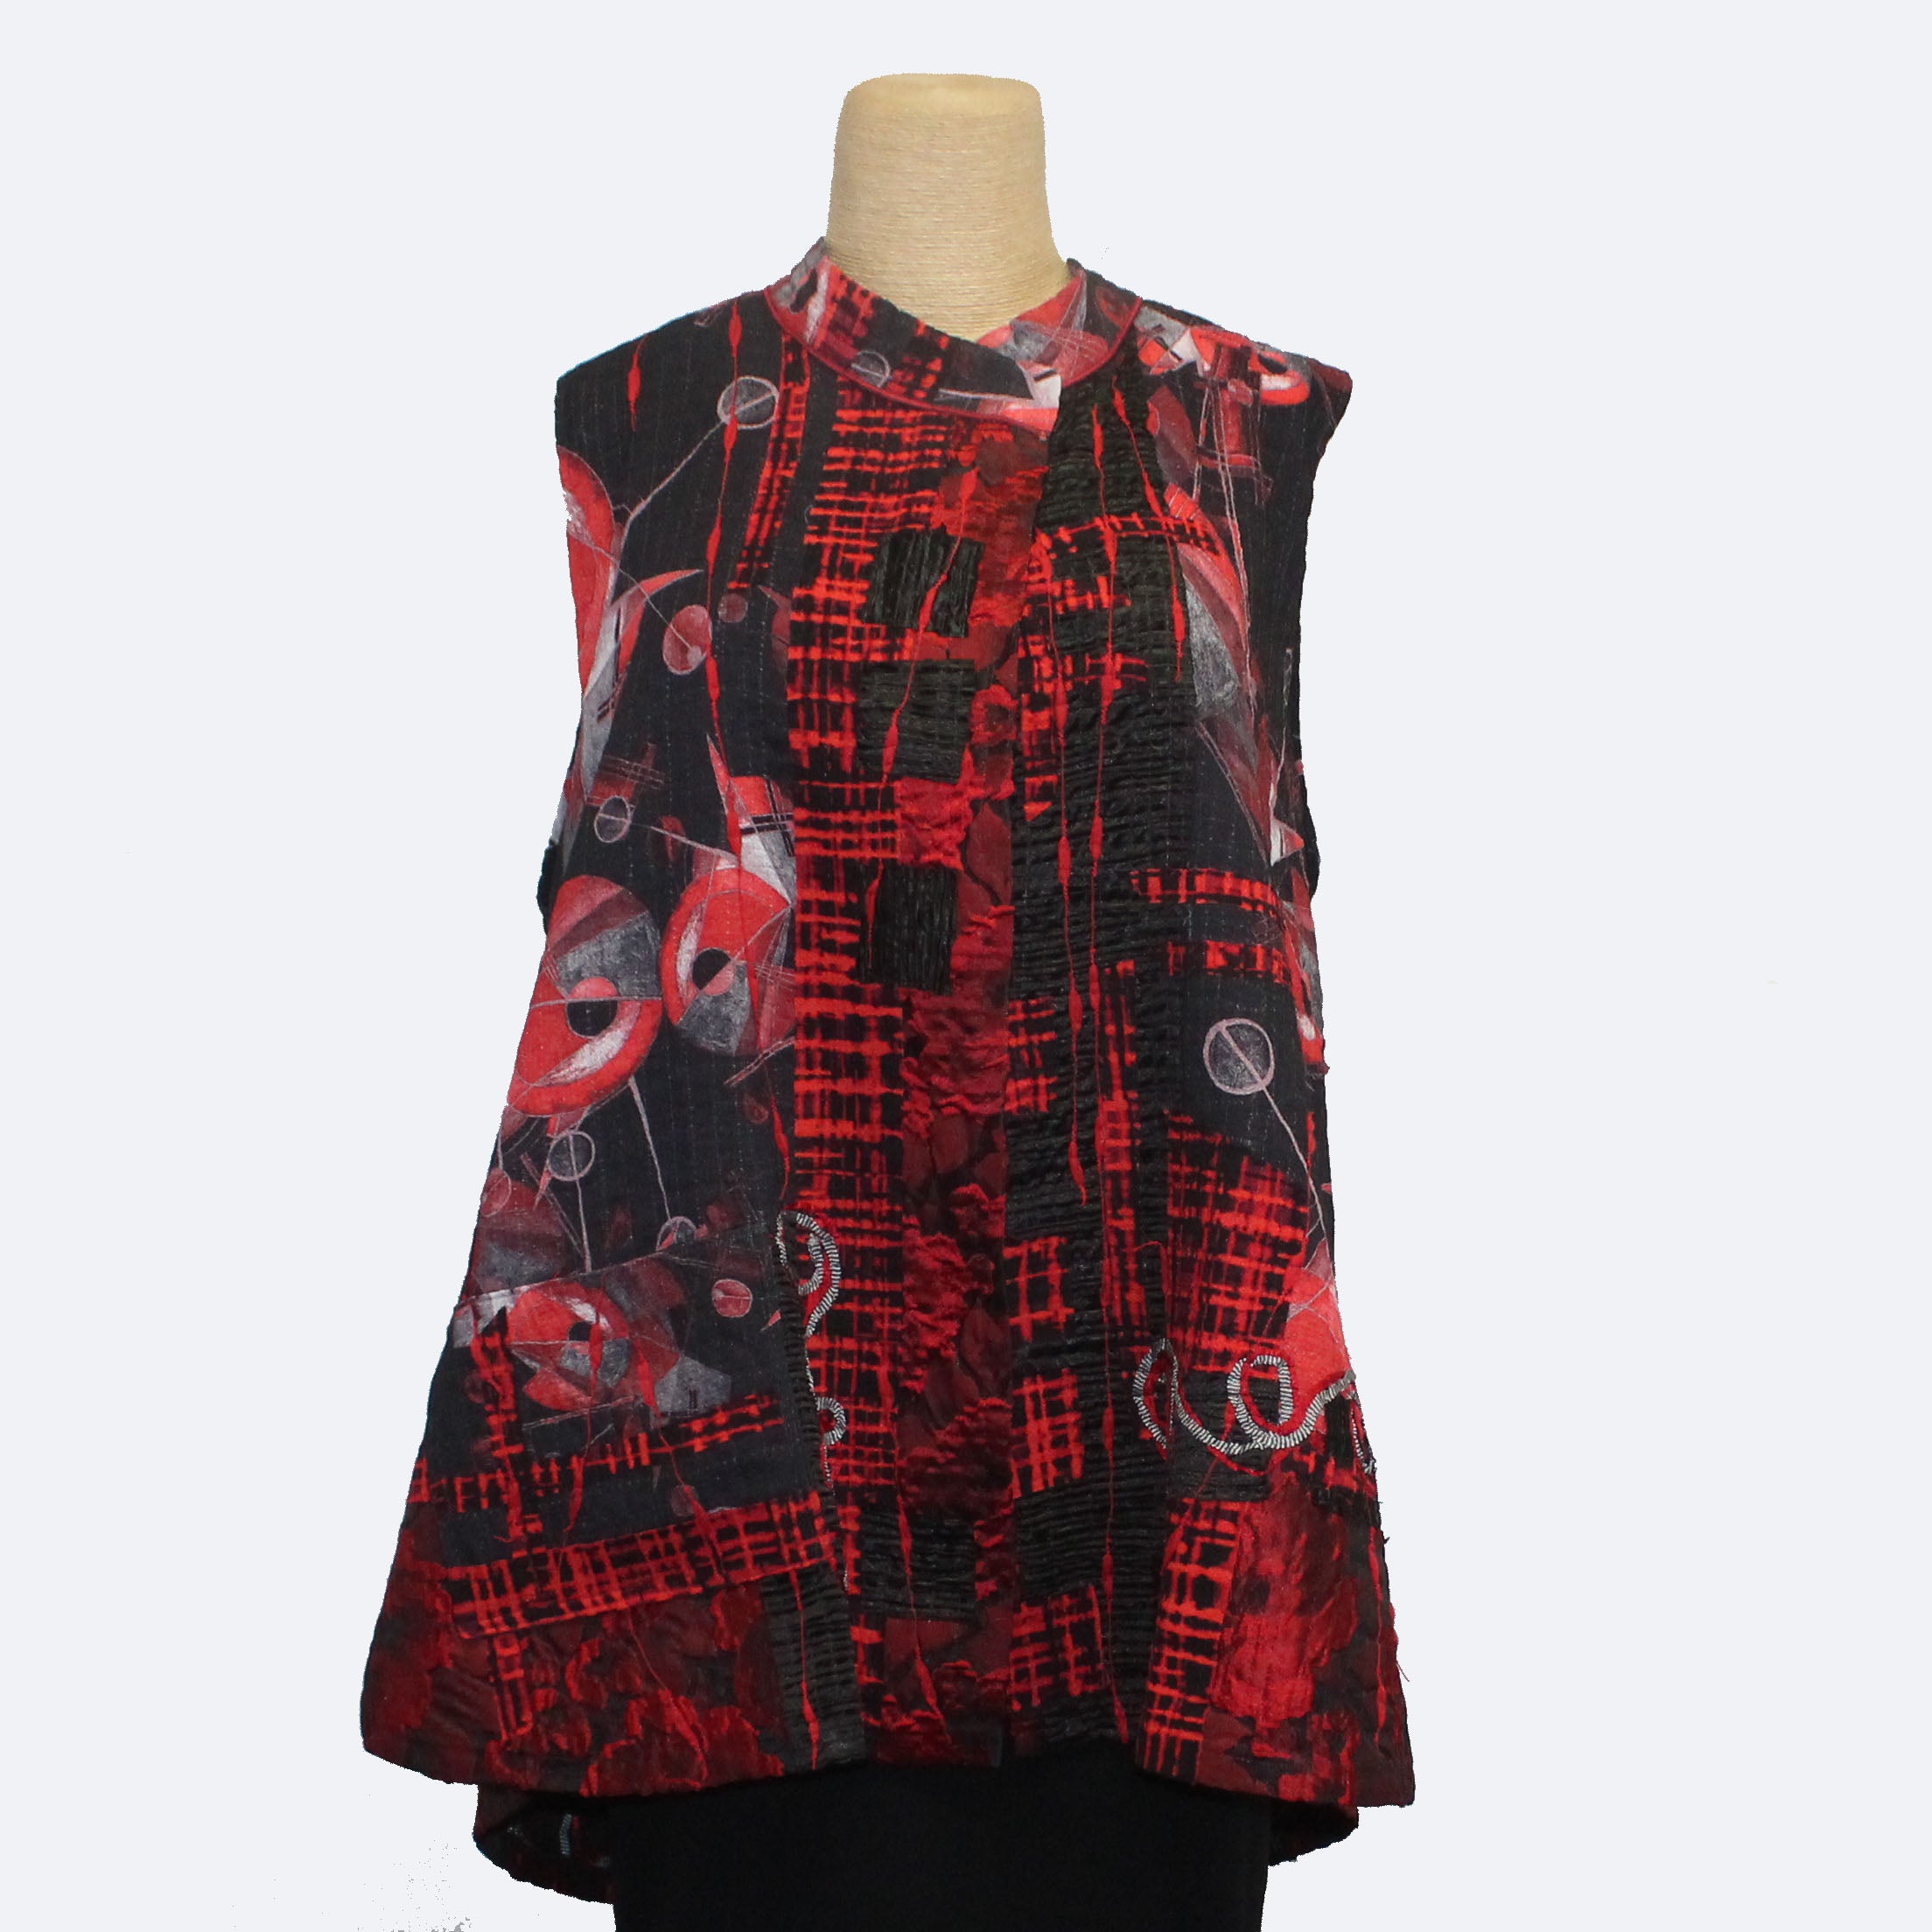 Diane Prekup Vest, Market, Black/Red Roses, M